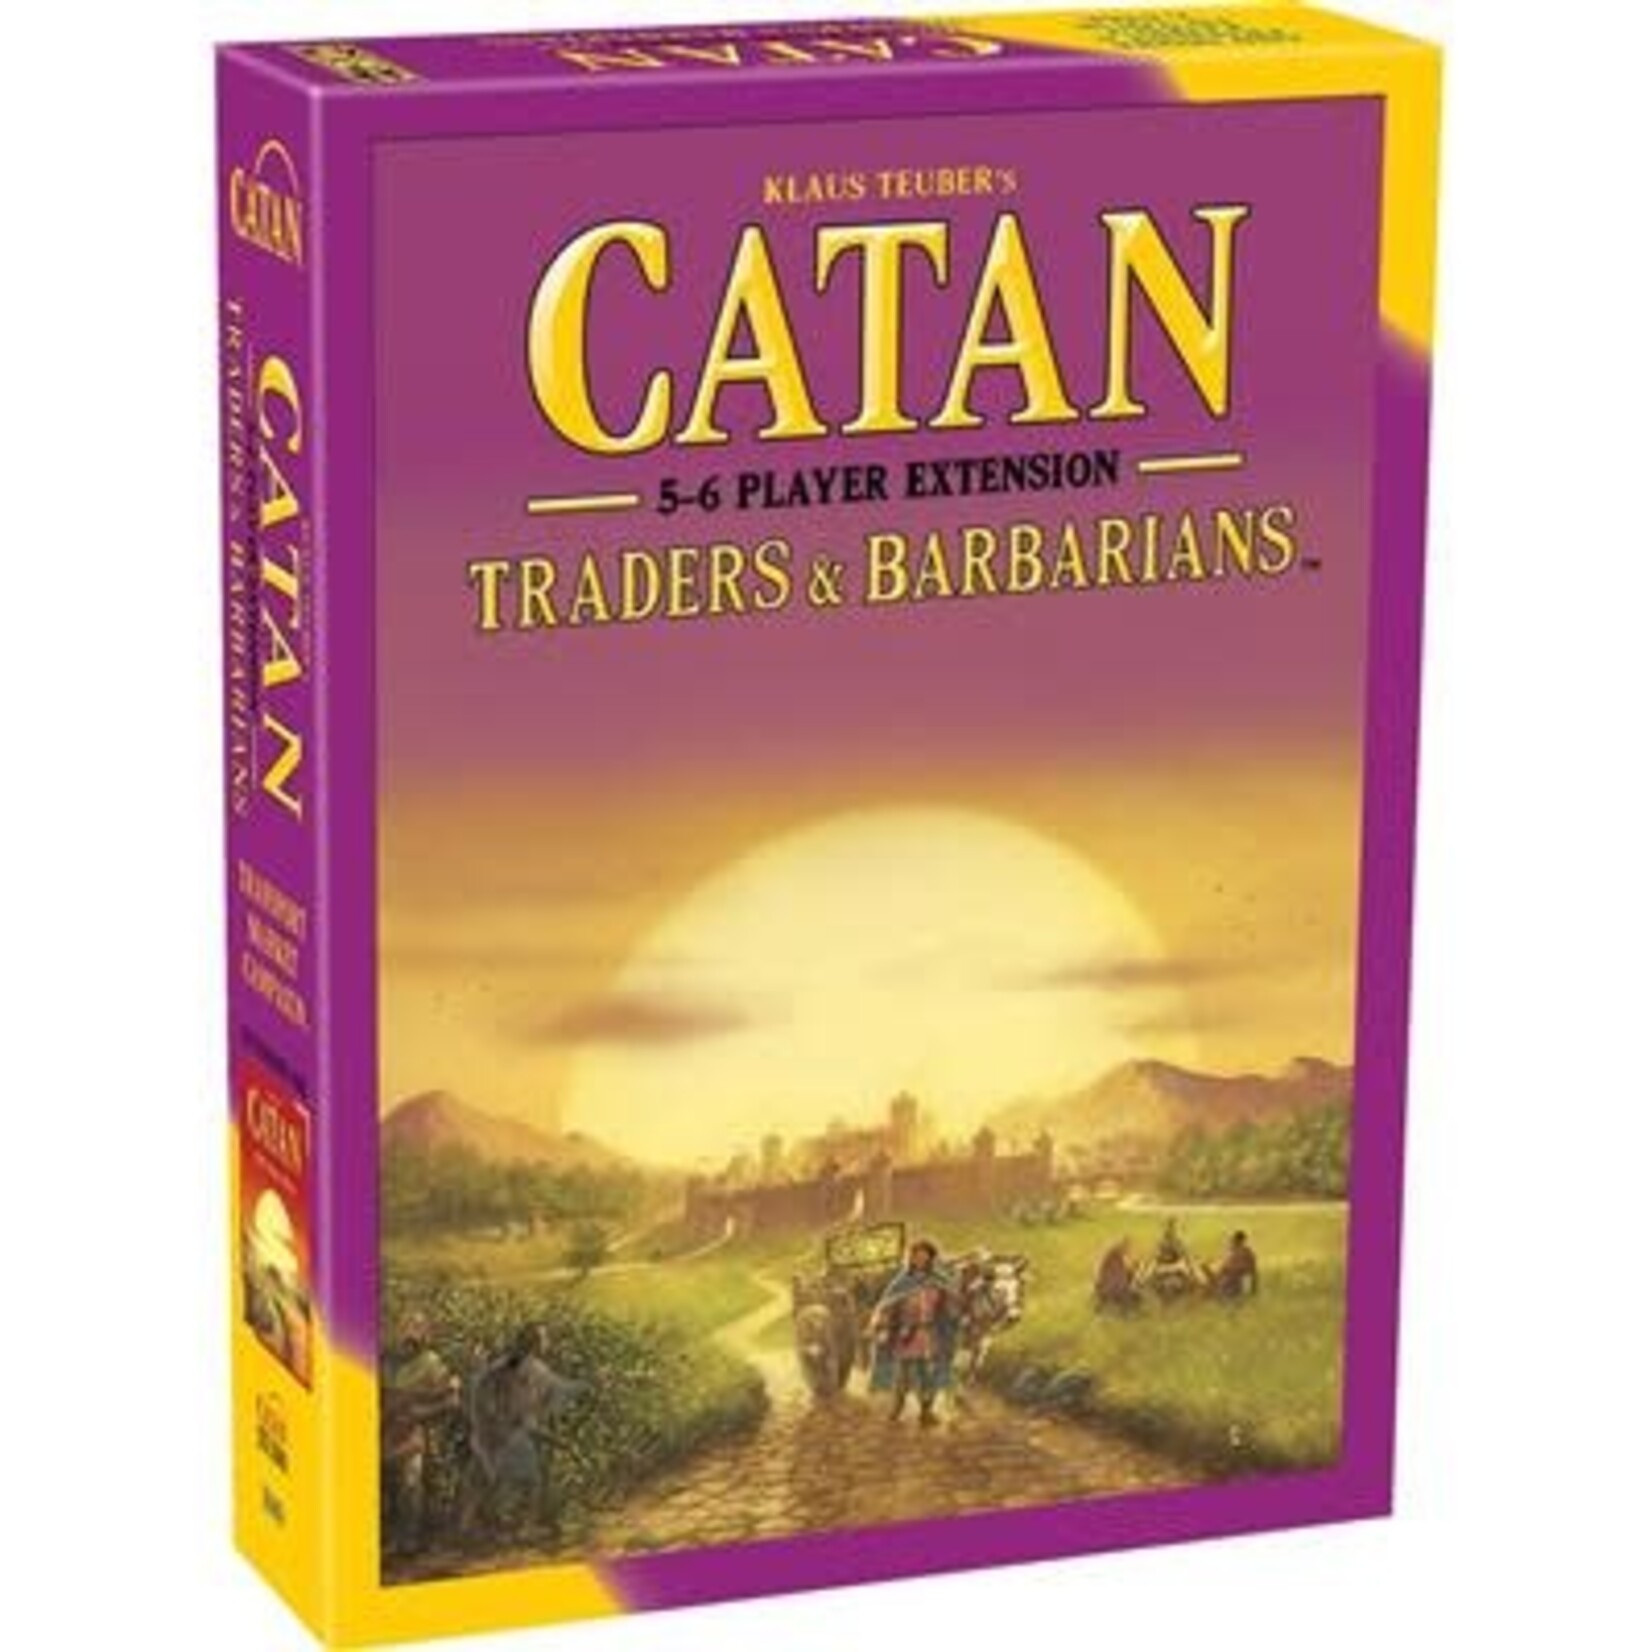 Catan Studio Catan - Traders and Barbarians 5-6 Player Expansion